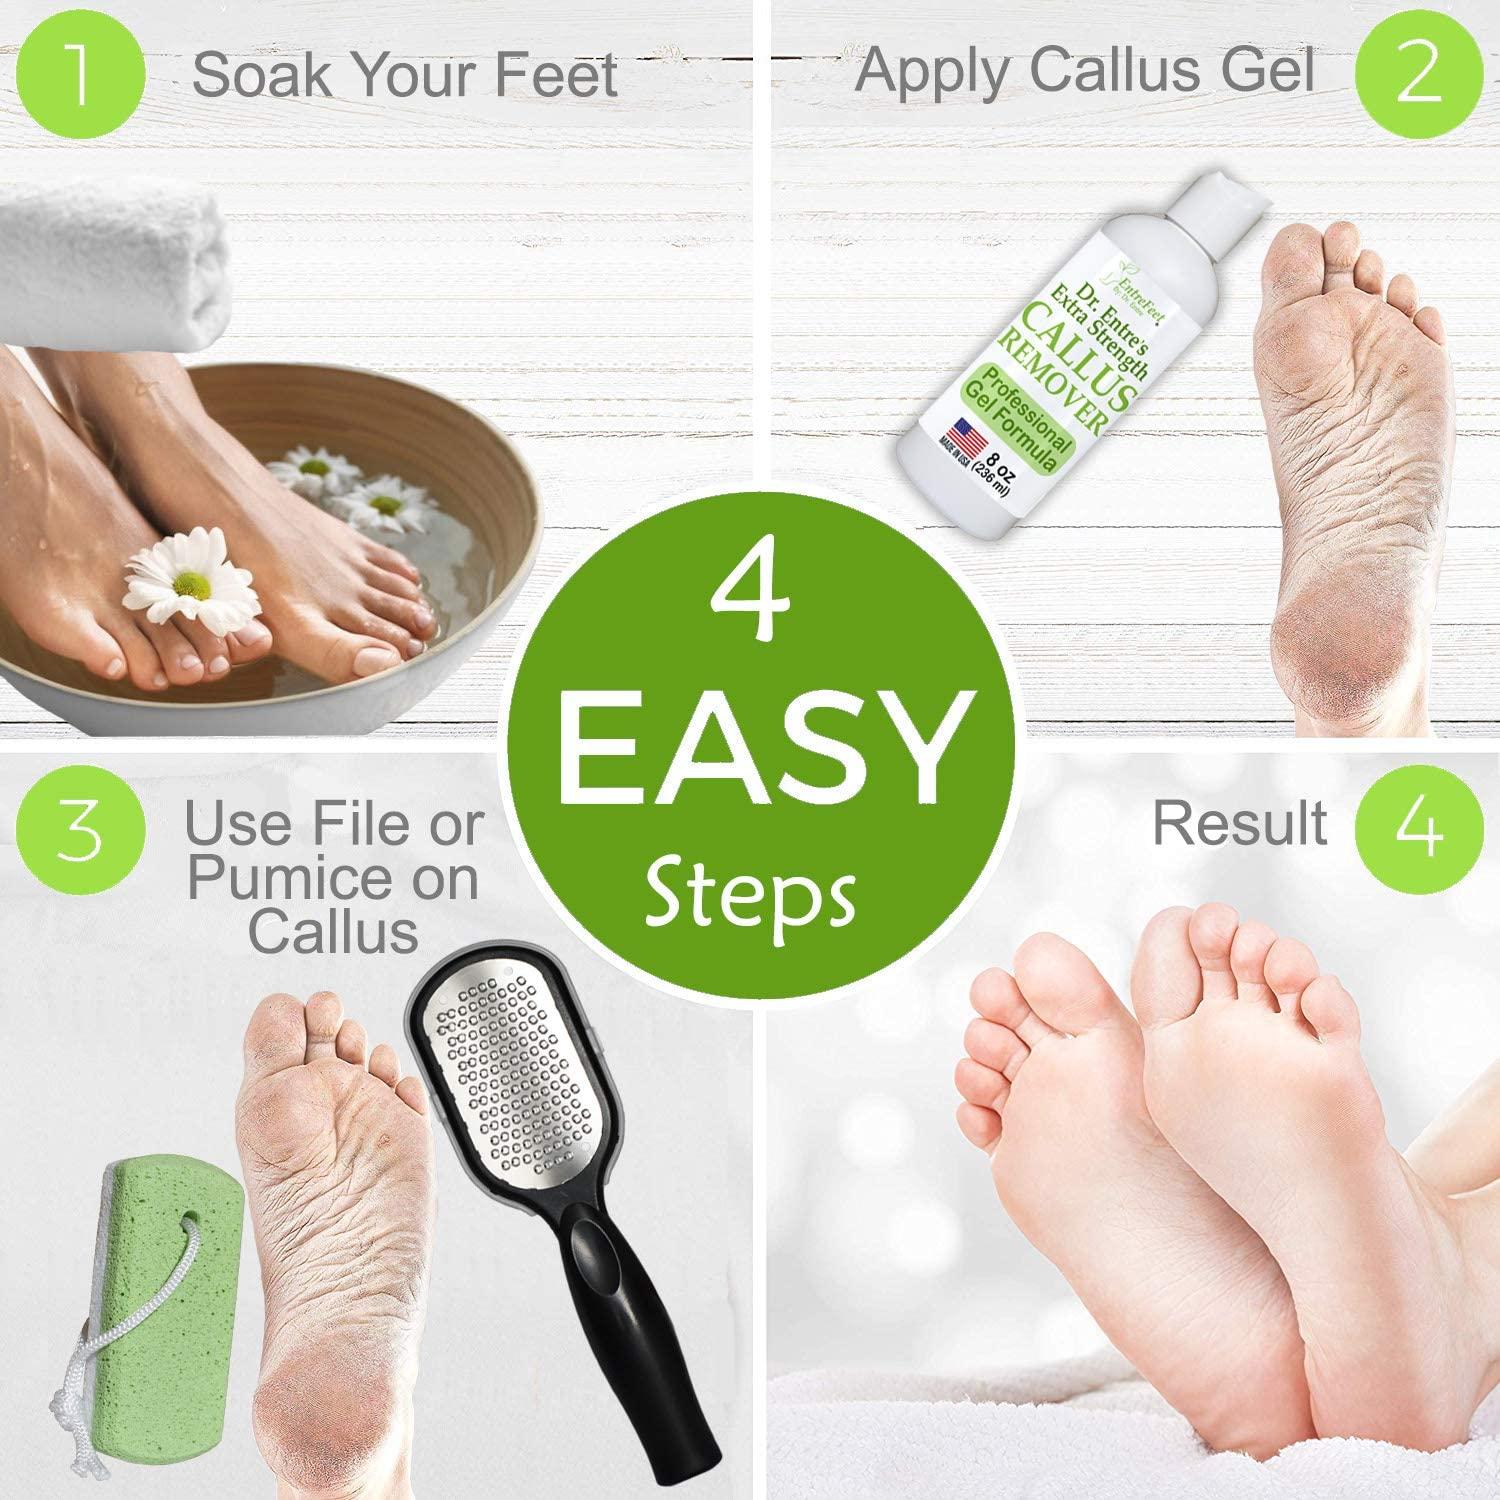 Dr. Entre's Callus Remover Kit for Feet: 8oz Callus Remover Gel